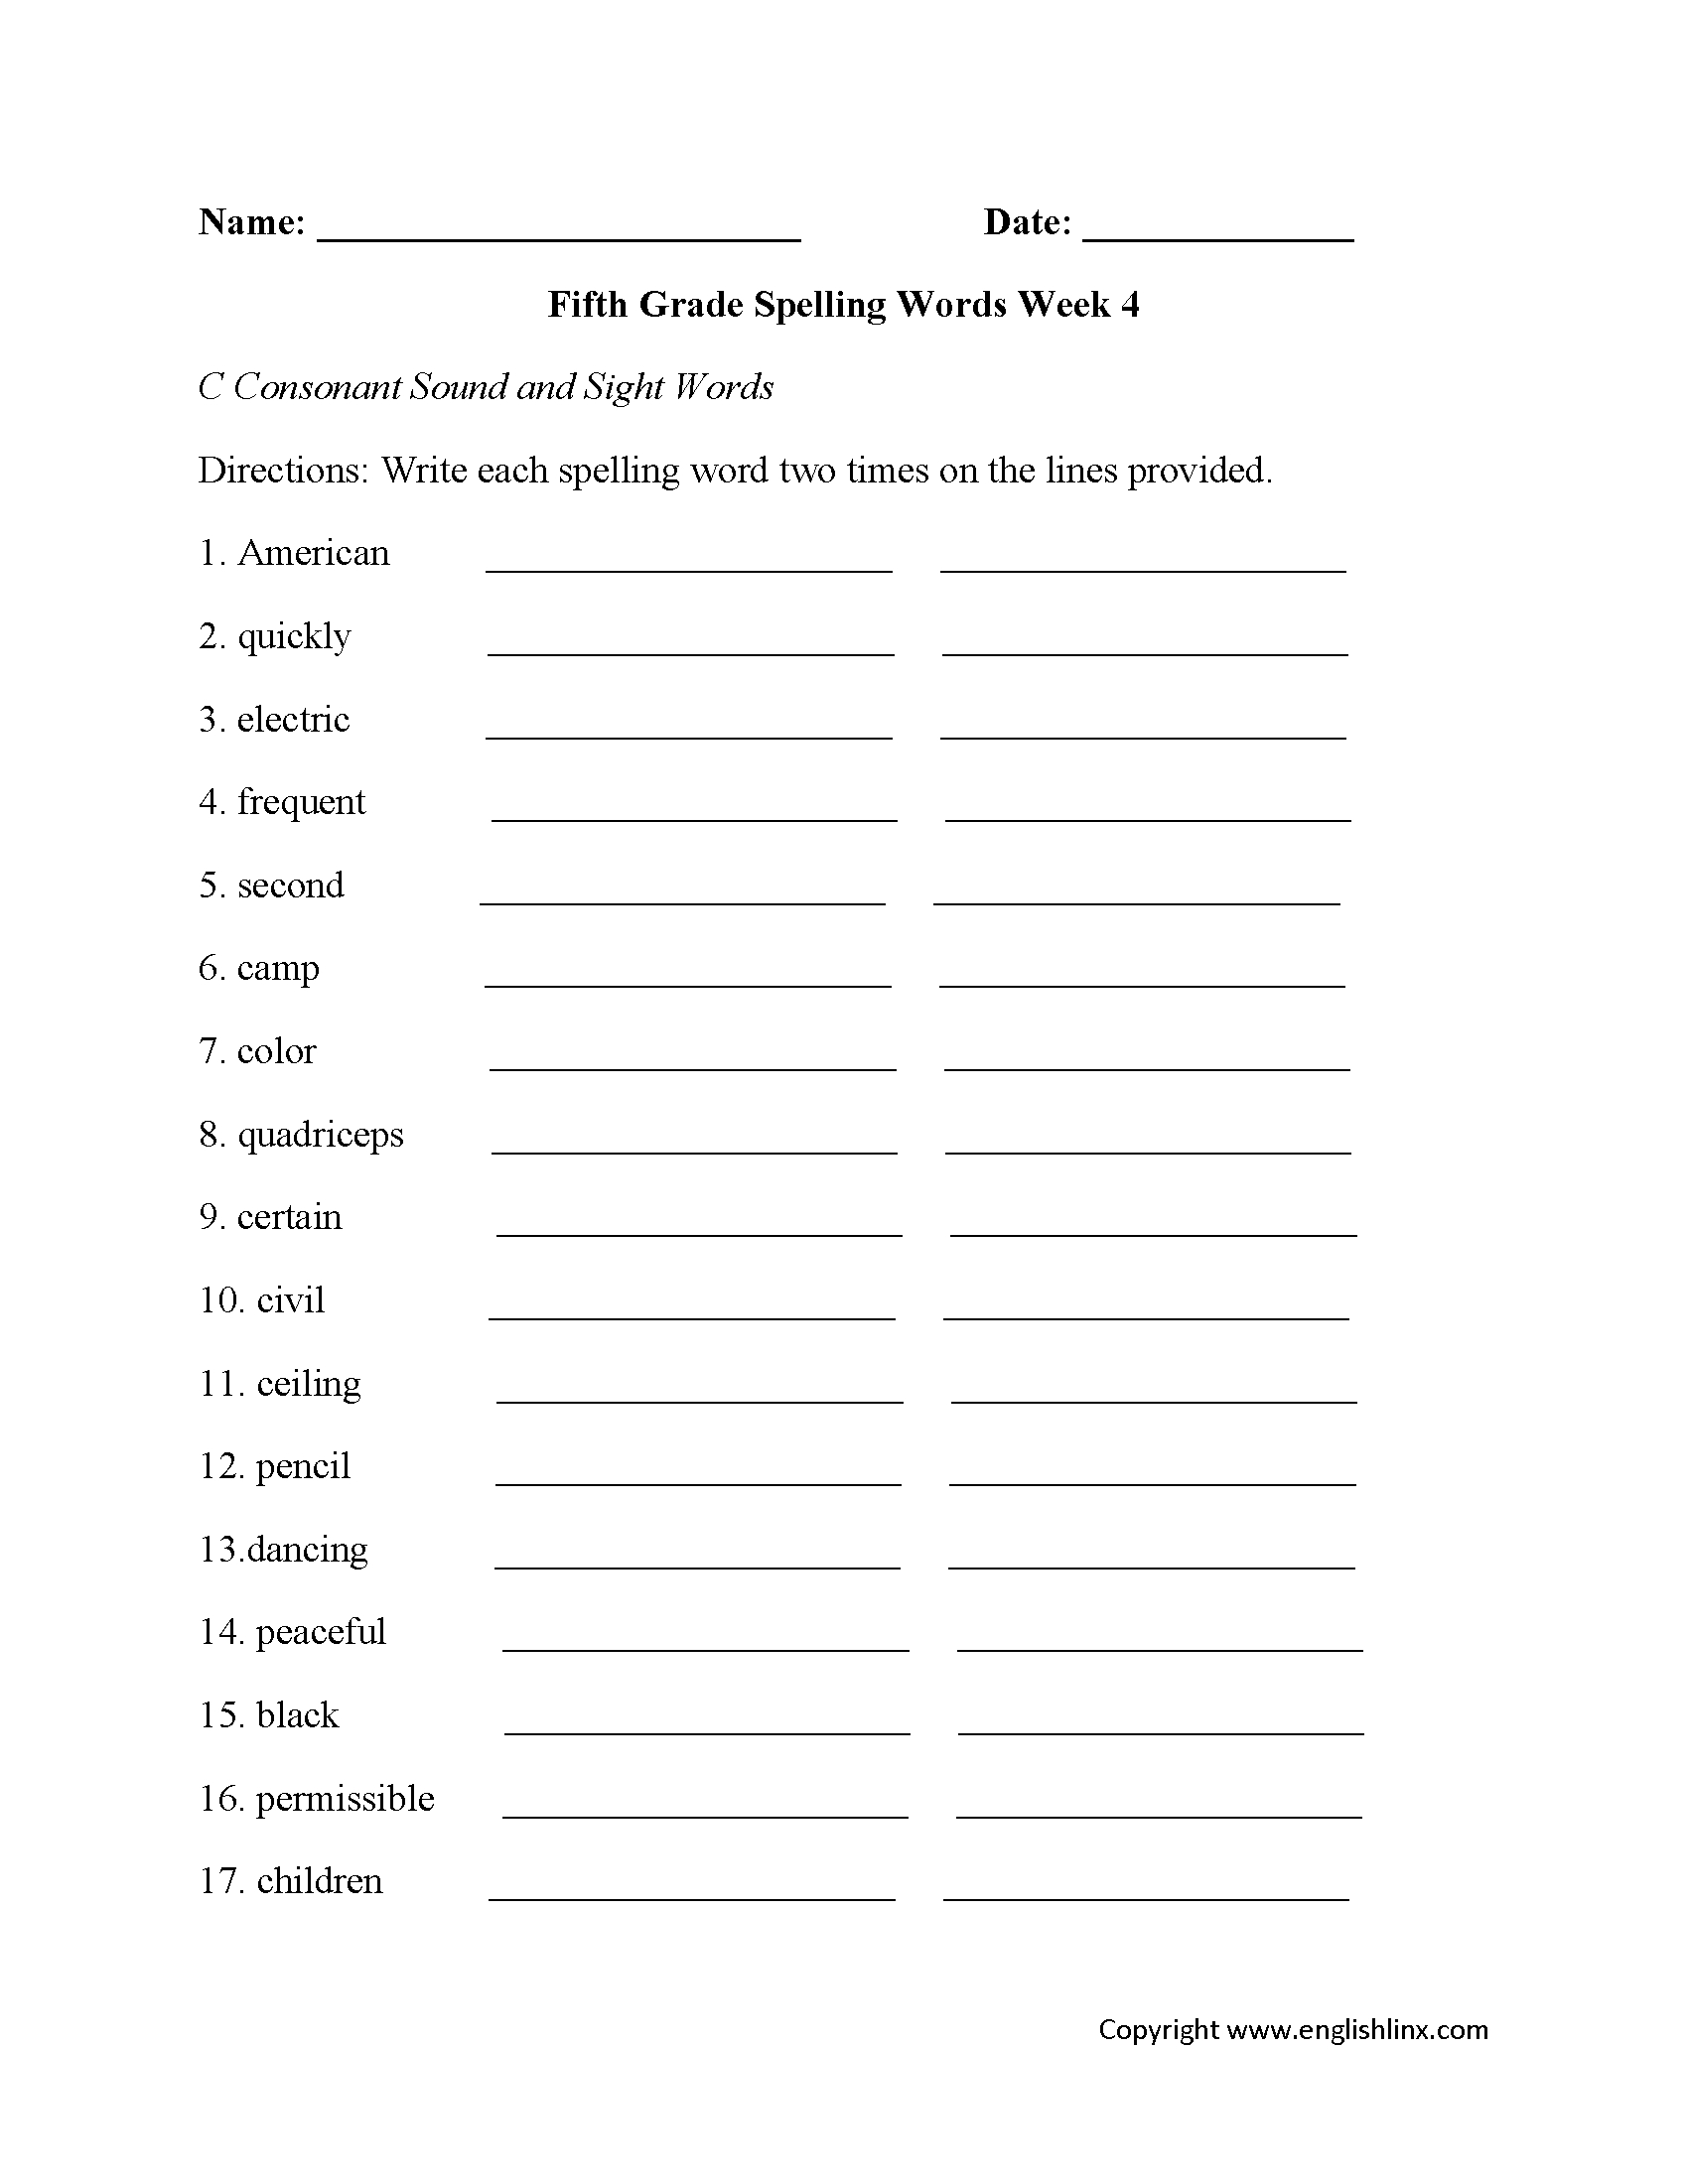 Spelling Worksheets  Fifth Grade Spelling Worksheets In 2Nd Grade Spelling Worksheets